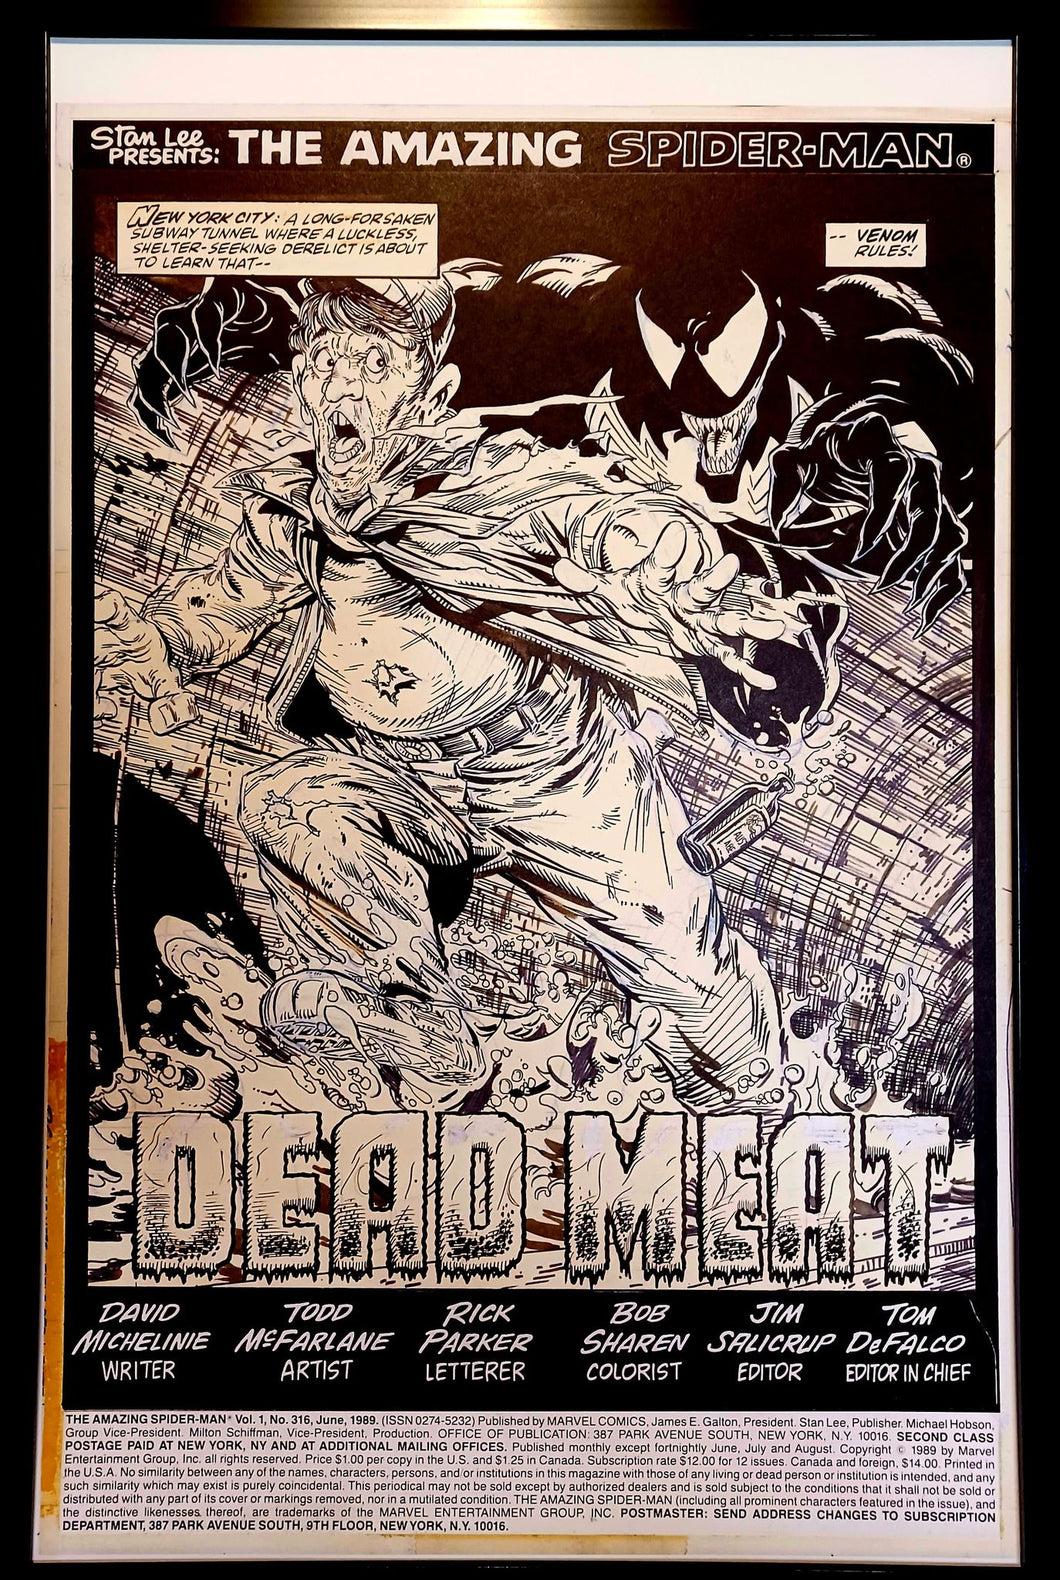 Amazing Spider-Man #316 pg. 1 by Todd McFarlane 11x17 FRAMED Original Art Print Comic Poster